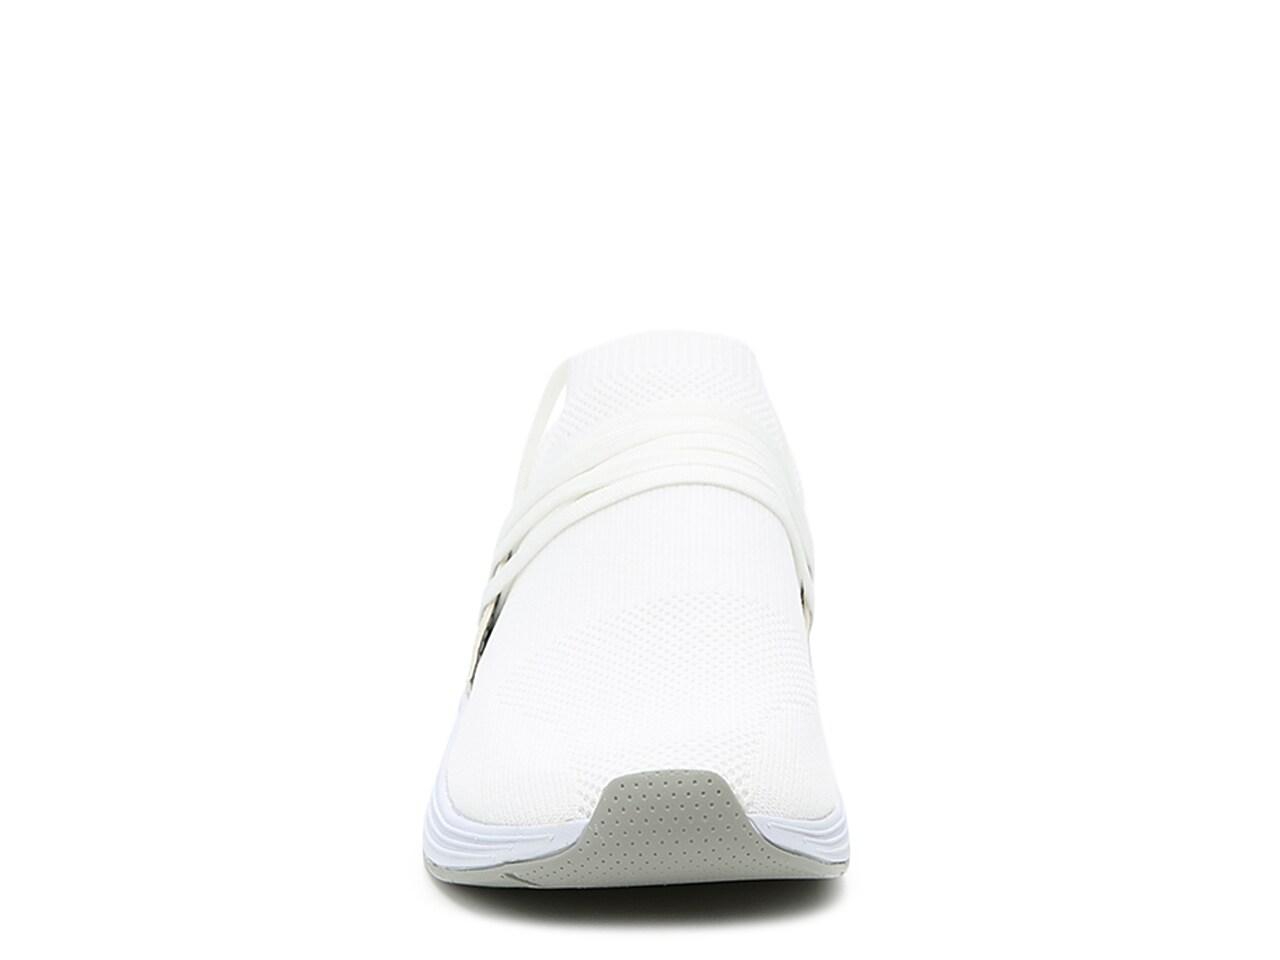 Seven 91 Synthetic Wicaylle Sneaker in White for Men - Lyst